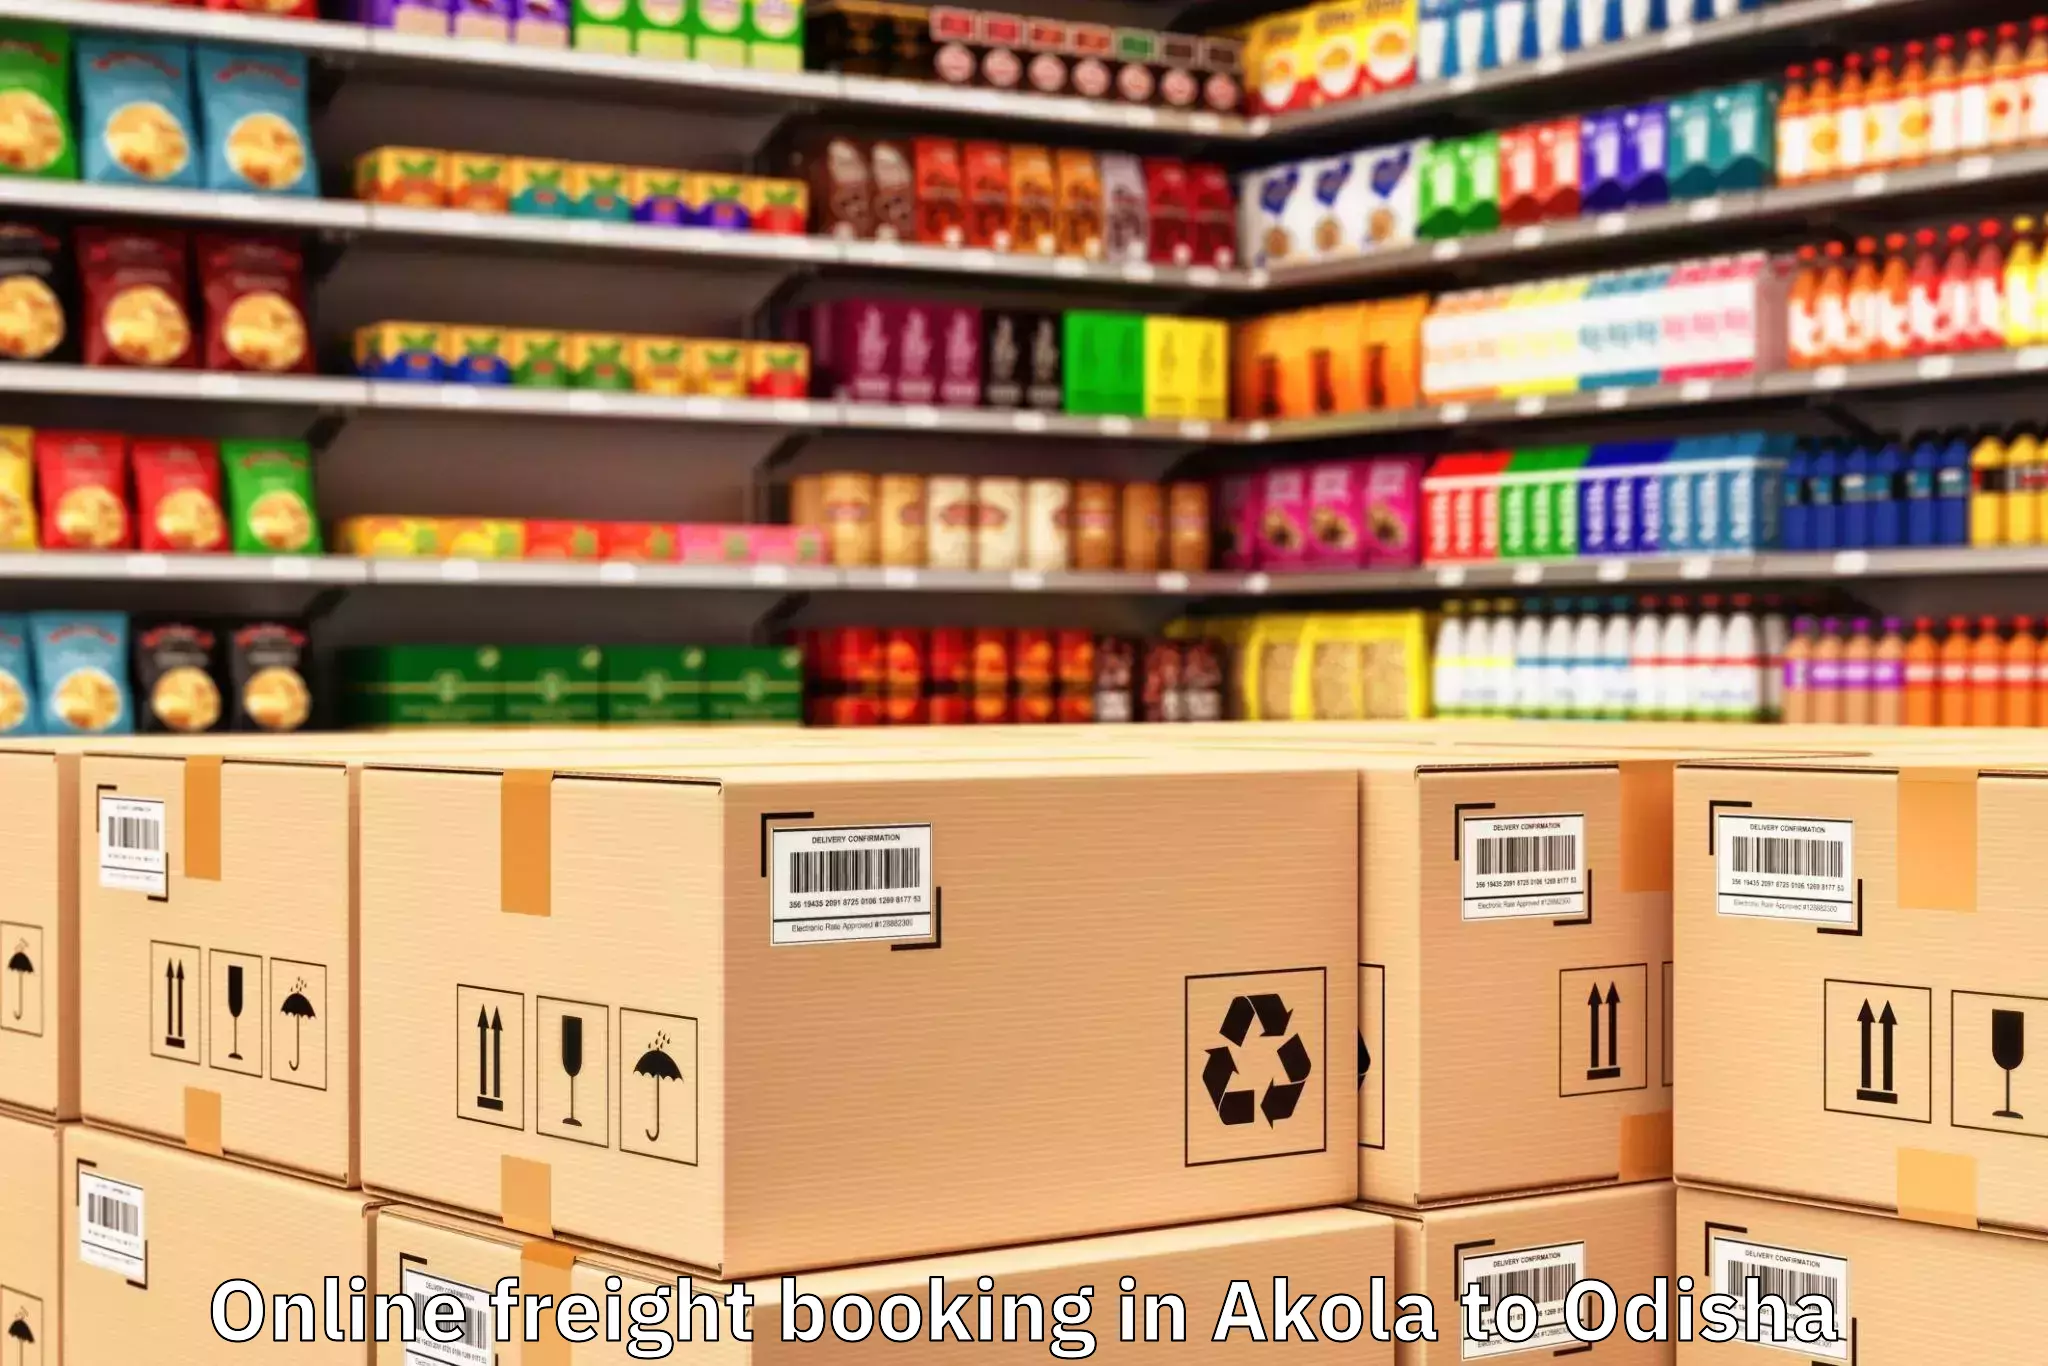 Top Akola to Kashinagara Online Freight Booking Available